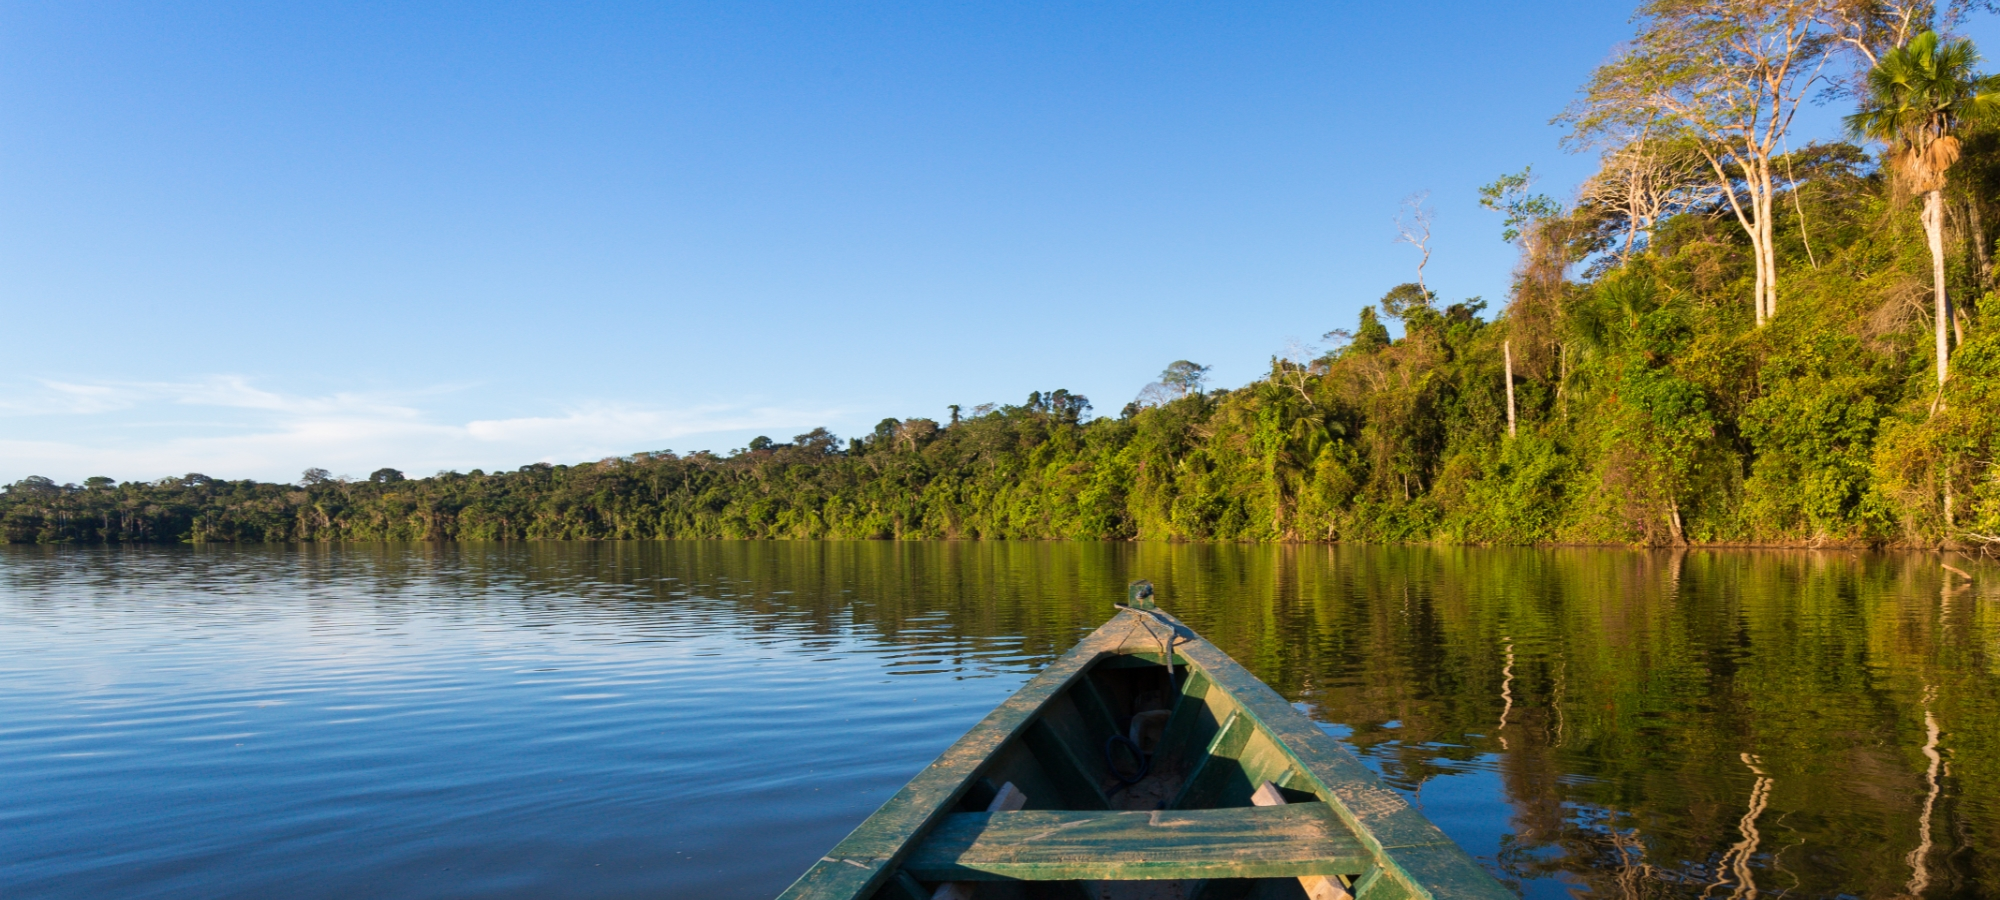 Embarquez pour une aventure unique à Iquitos,